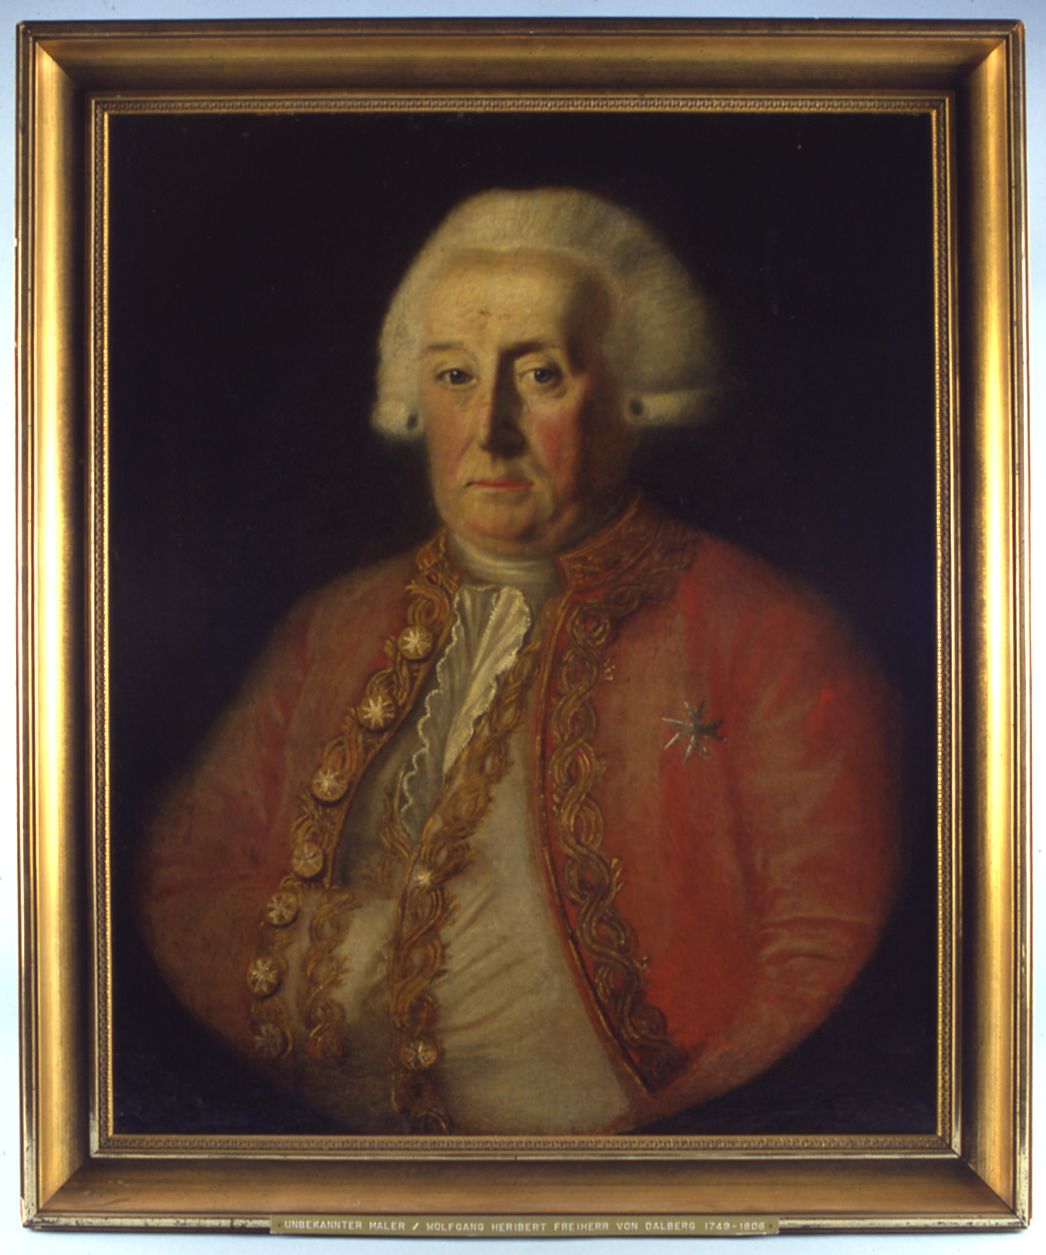 Wolfgang Heribert von Dalberg, unbekannter Künstler, um 1800, Reiss-Engelhorn-Museen